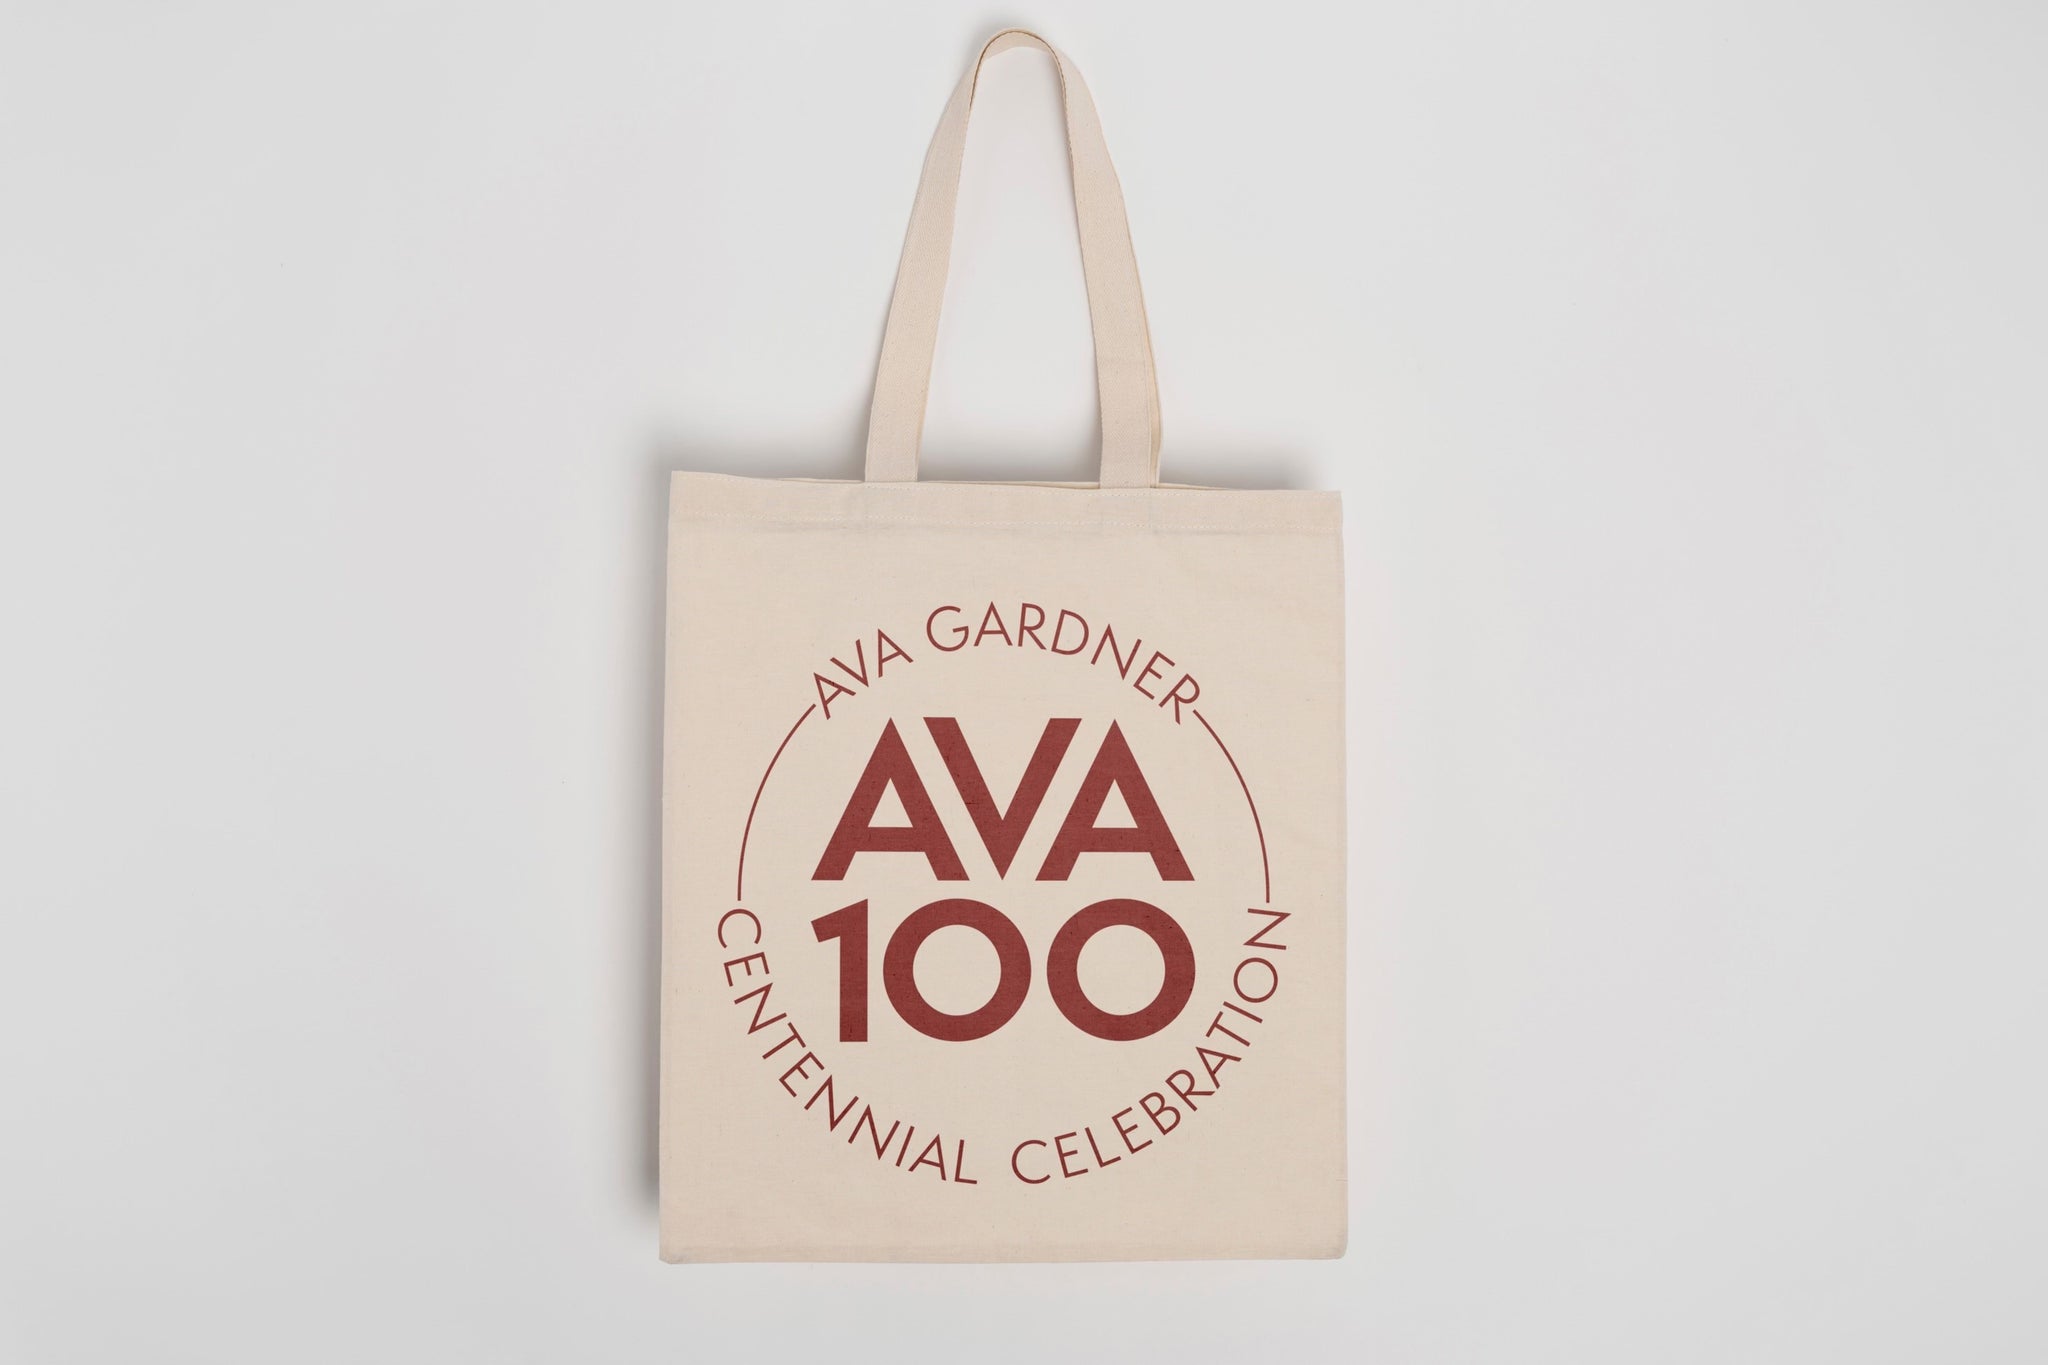 Tote Bag - Ava 100 Canvas *50% OFF!